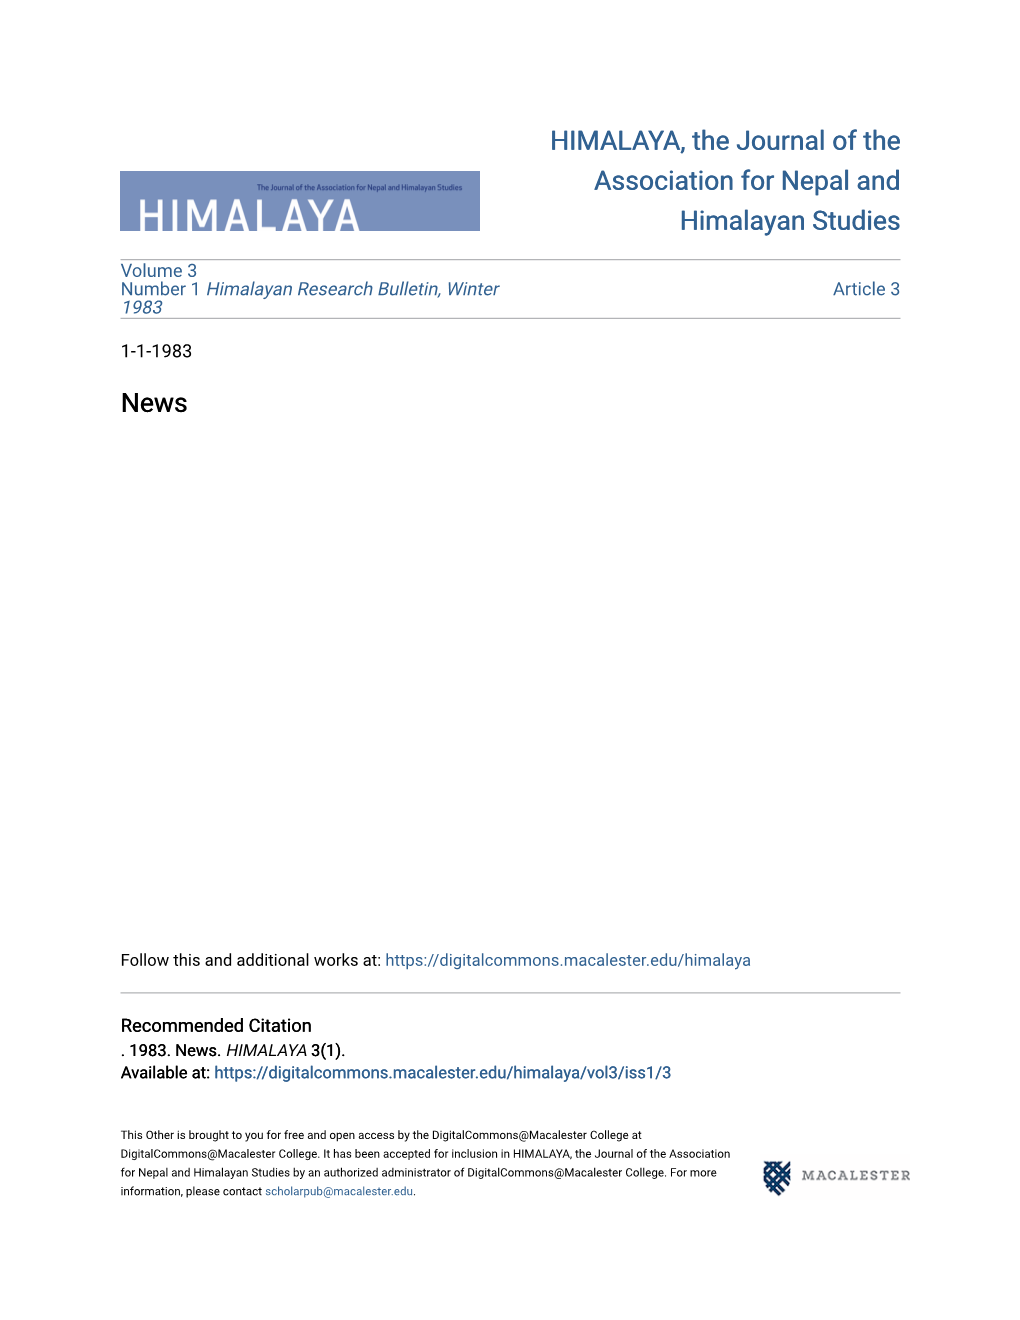 HIMALAYA, the Journal of the Association for Nepal and Himalayan Studies News